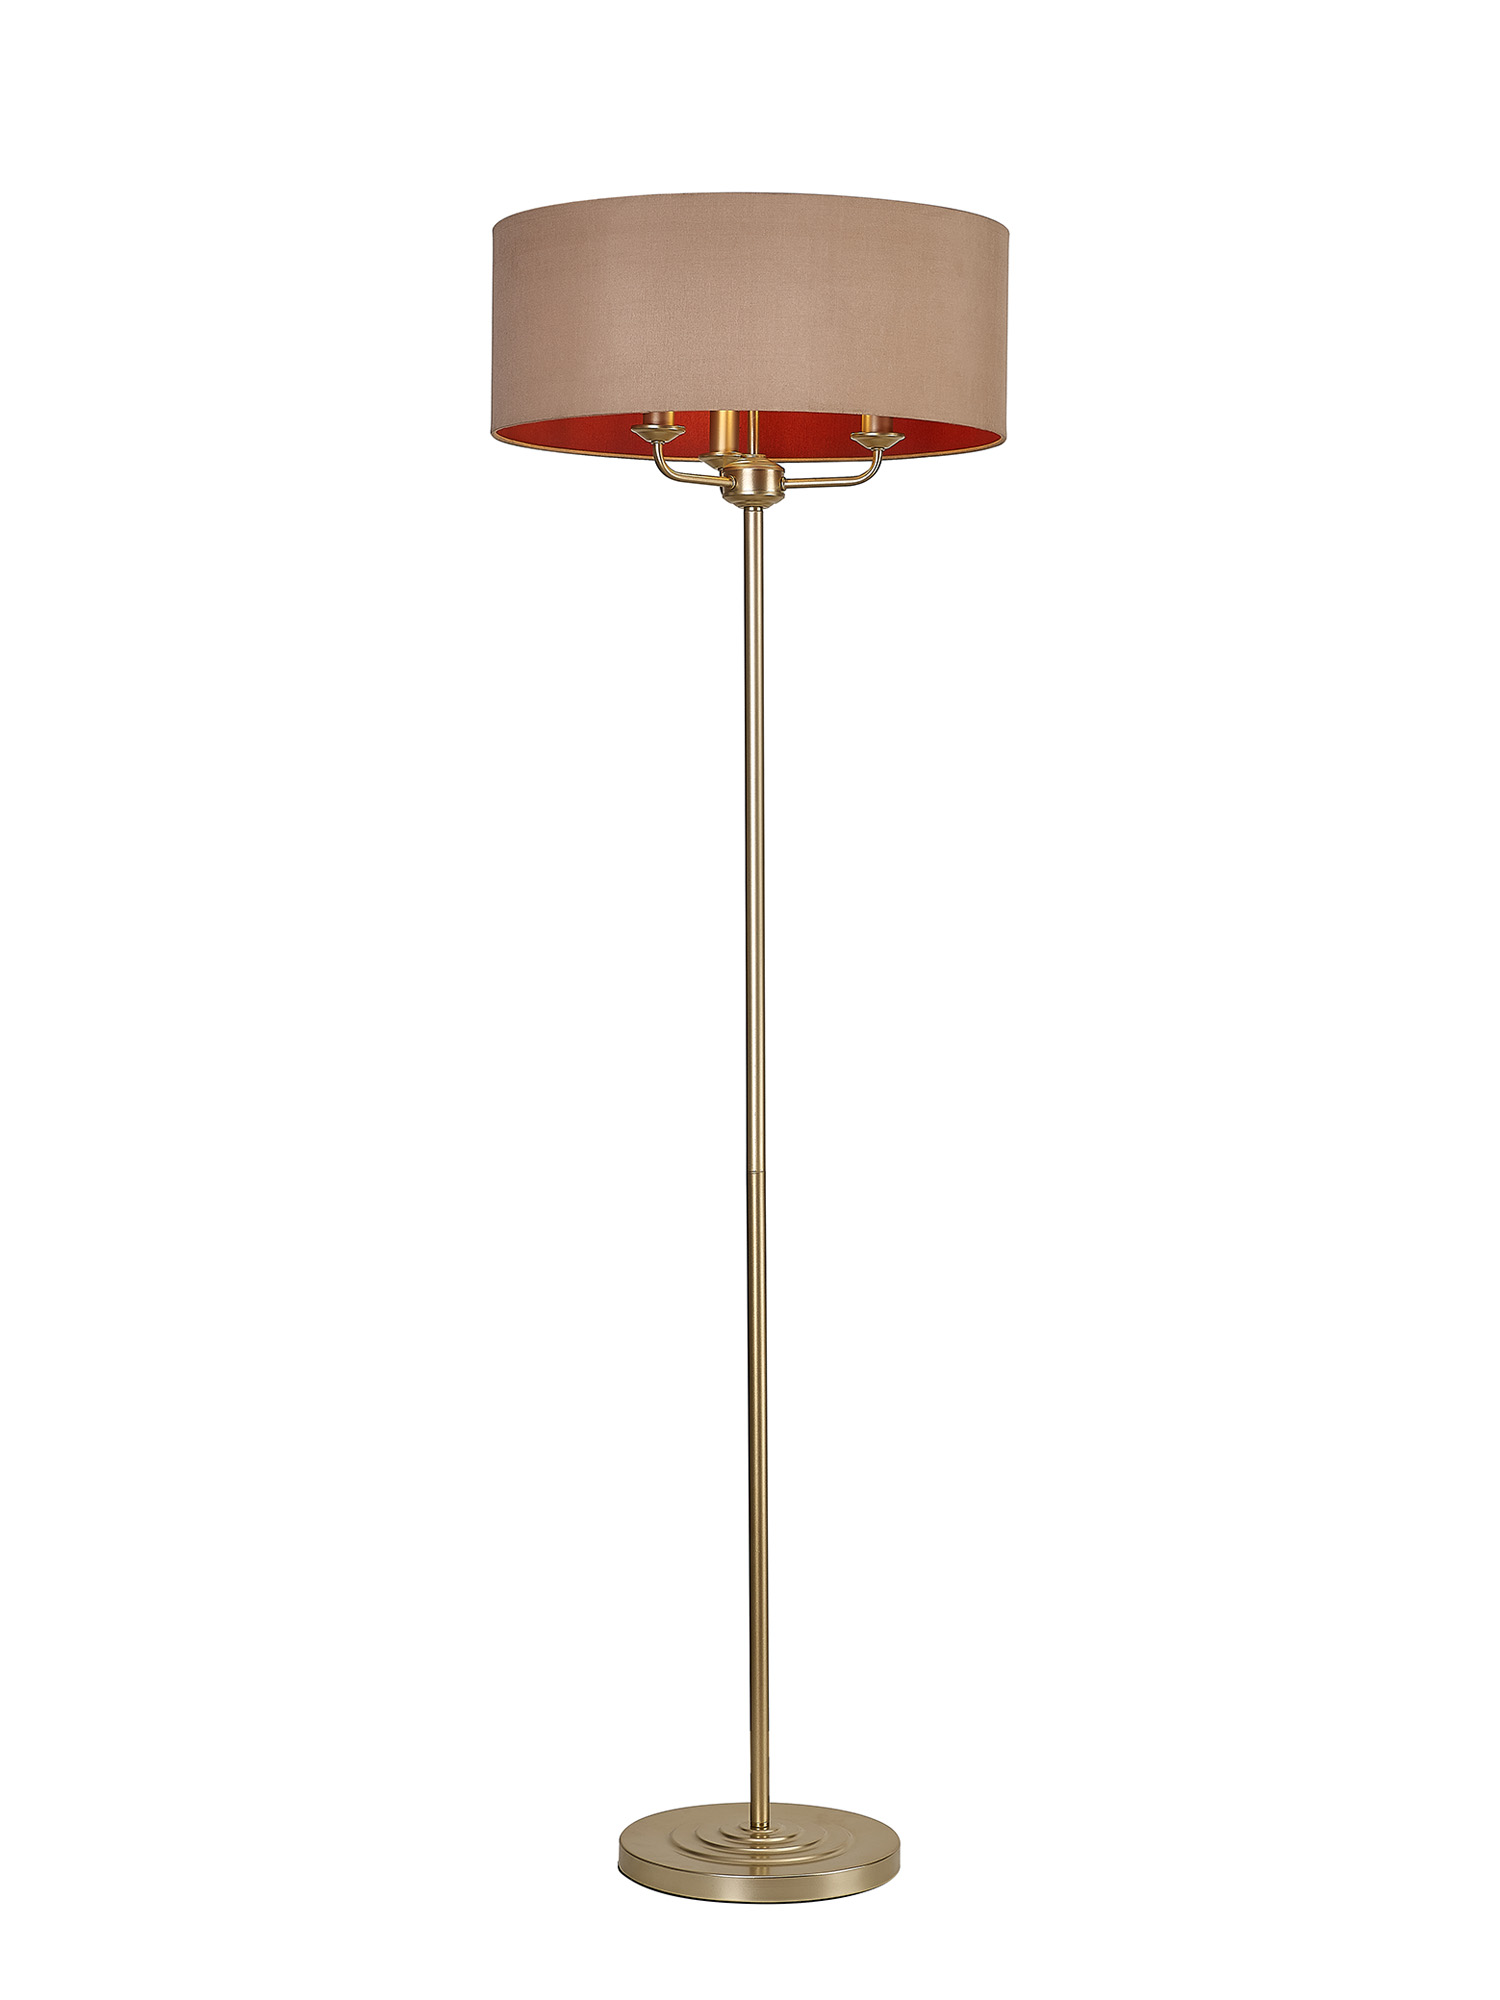 DK0997  Banyan 45cm 3 Light Floor Lamp Champagne Gold; Antique Gold